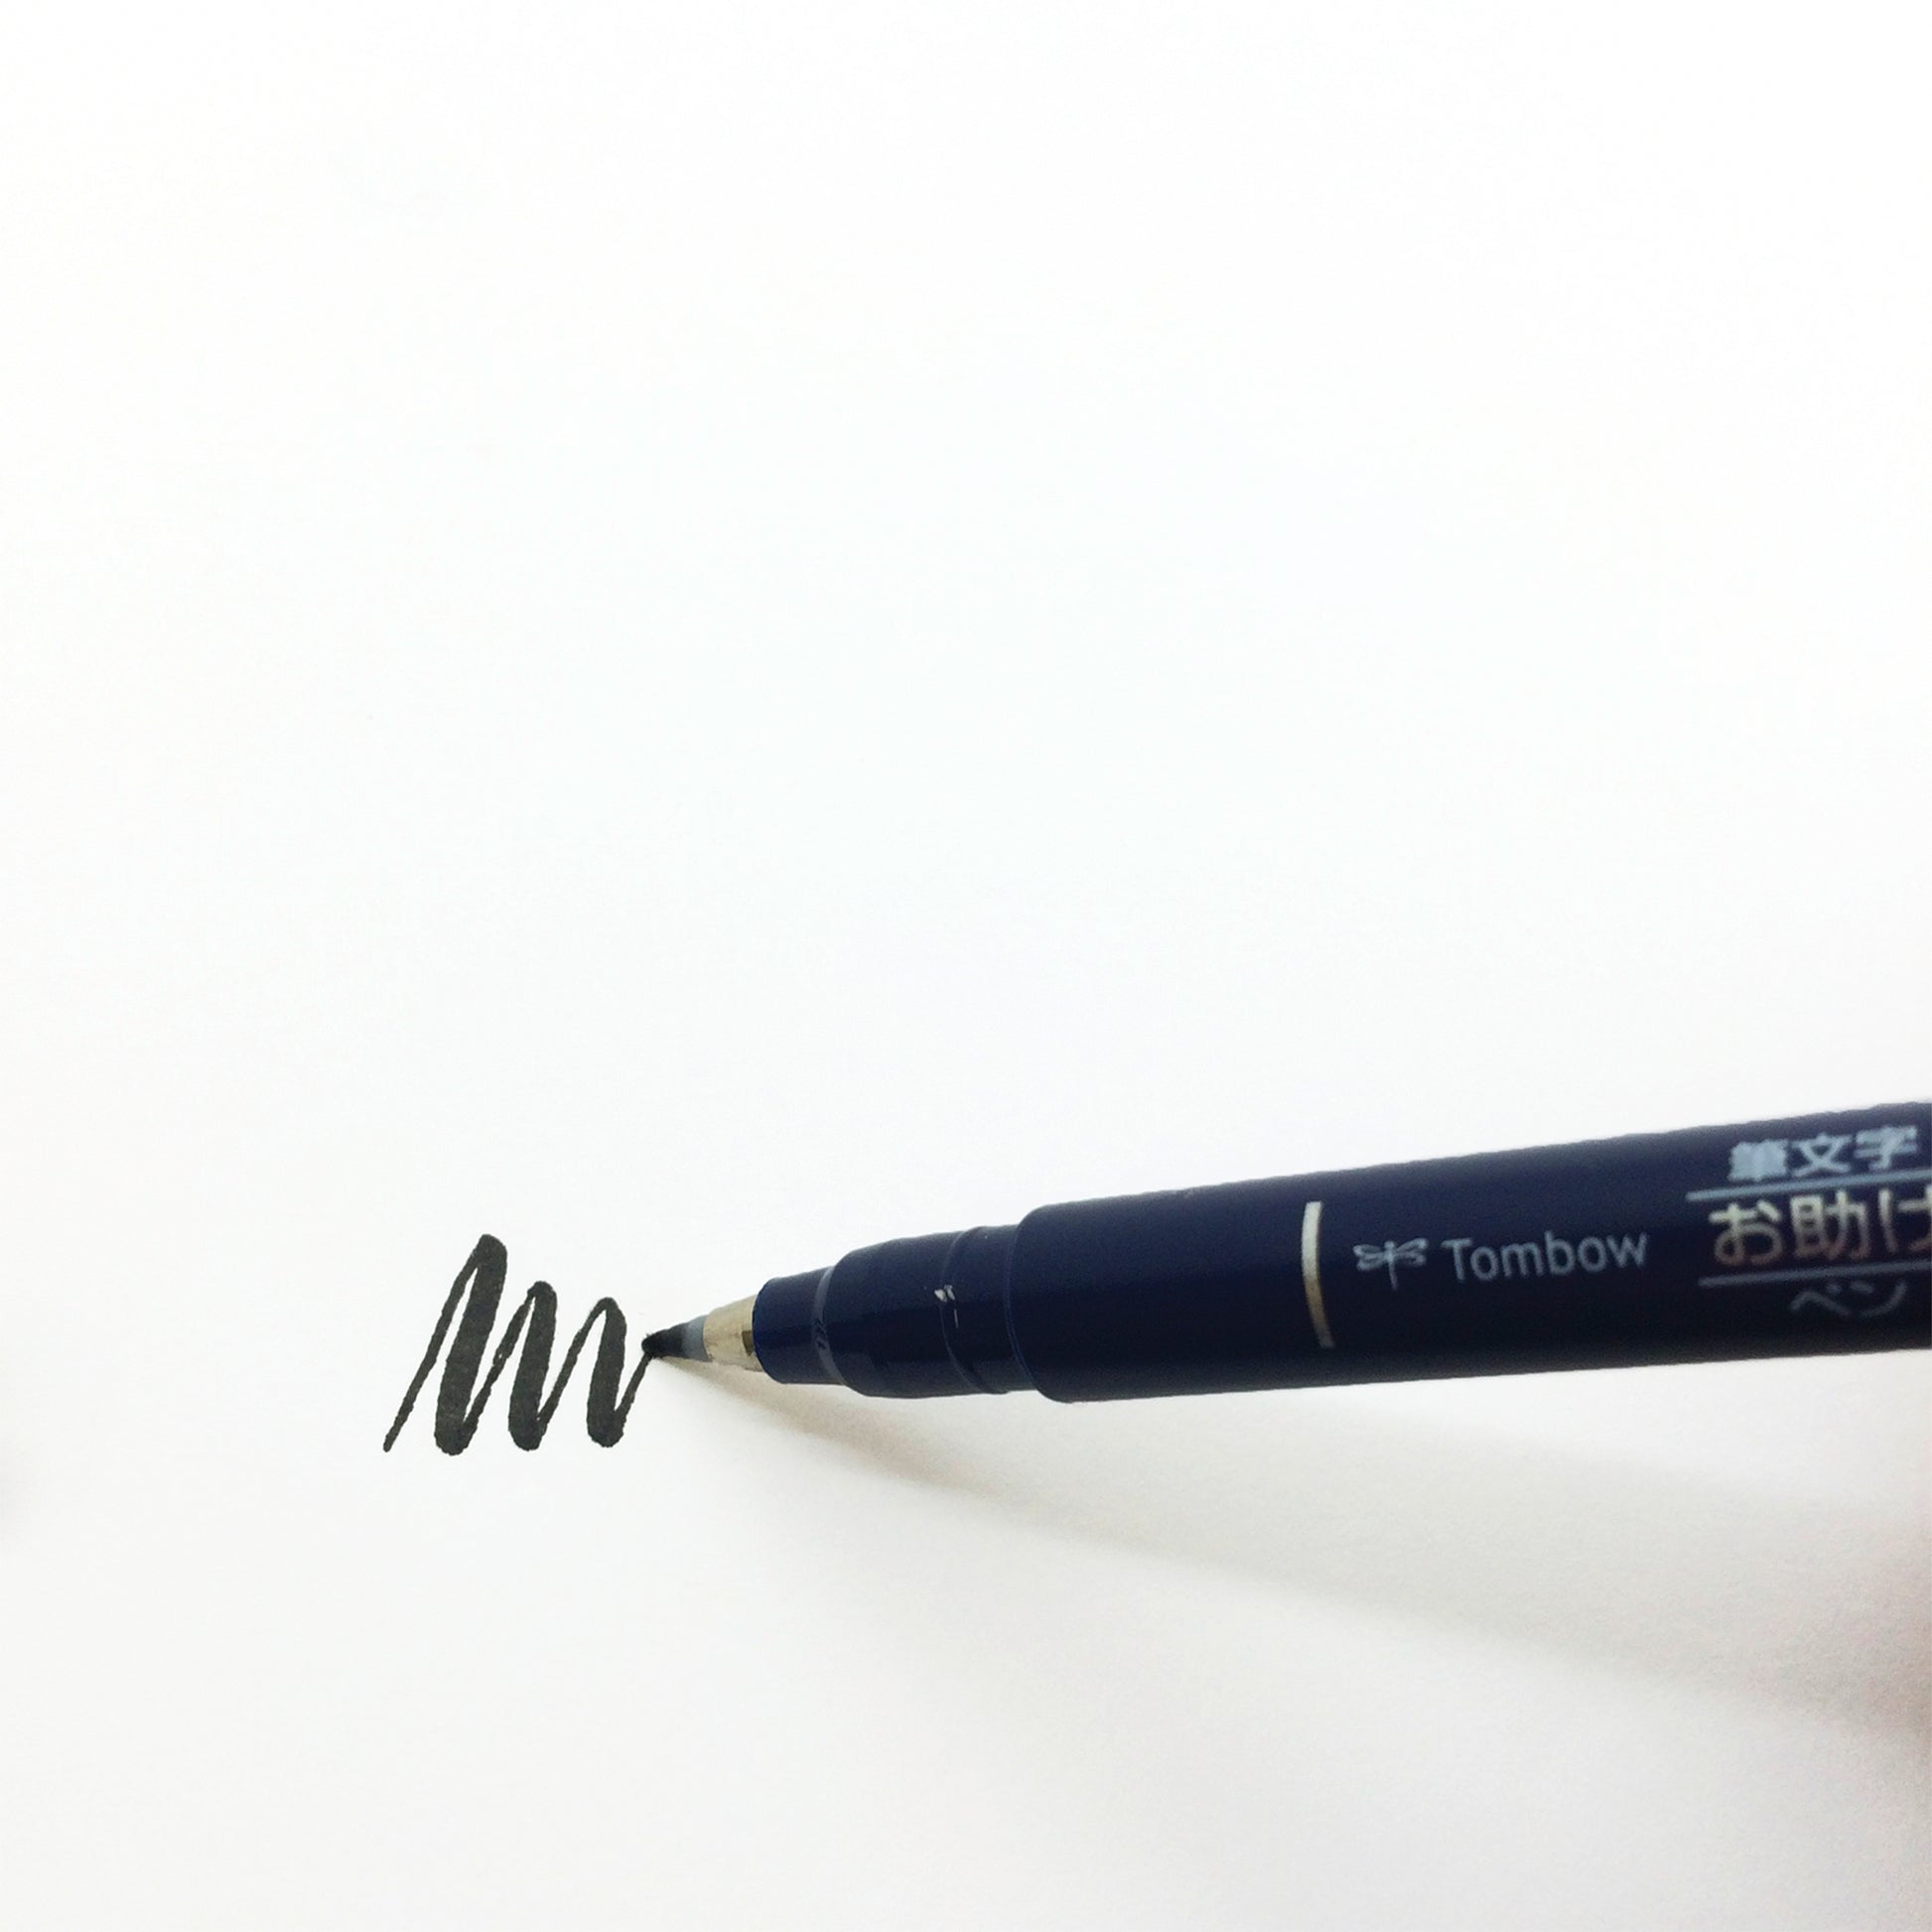 Tombow Fudenosuke Hard Tip Calligraphy Brush Pens (Pack of 5)